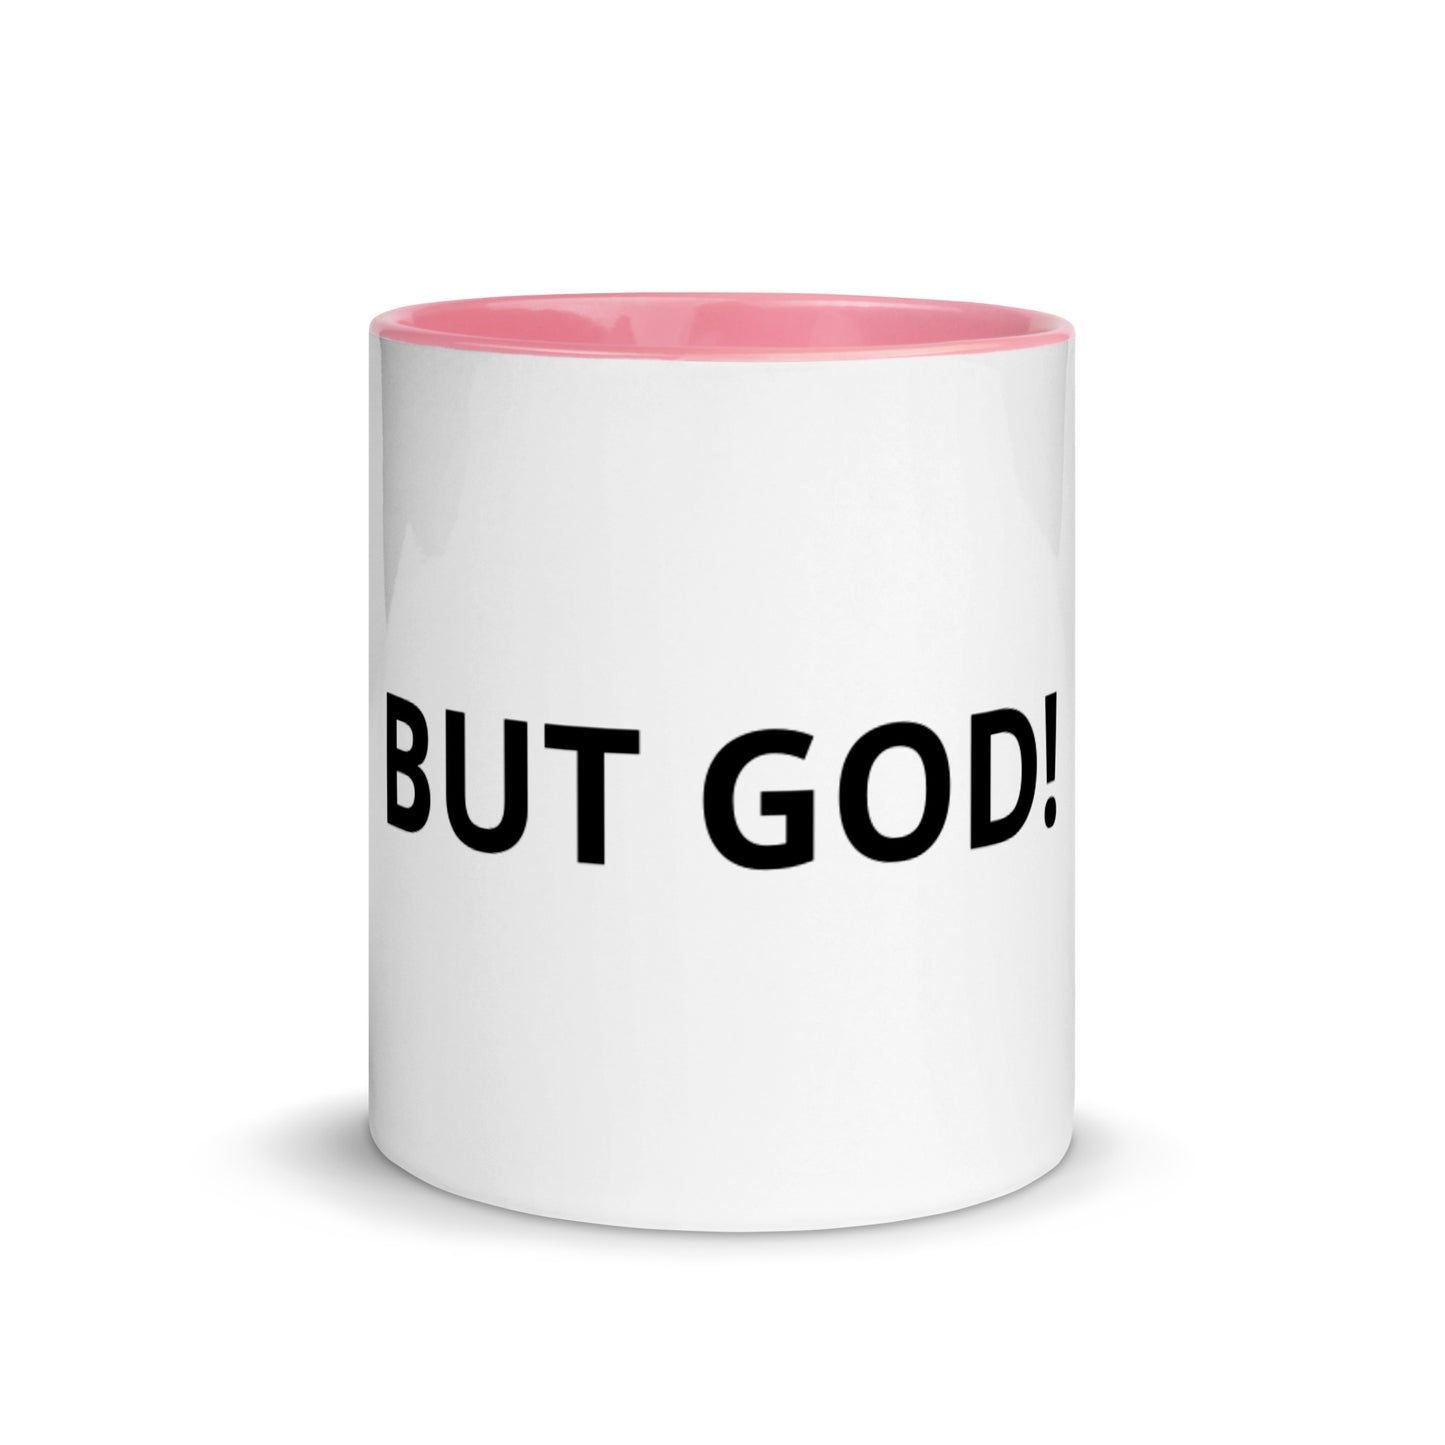 But God! White Ceramic Mug with Color Inside